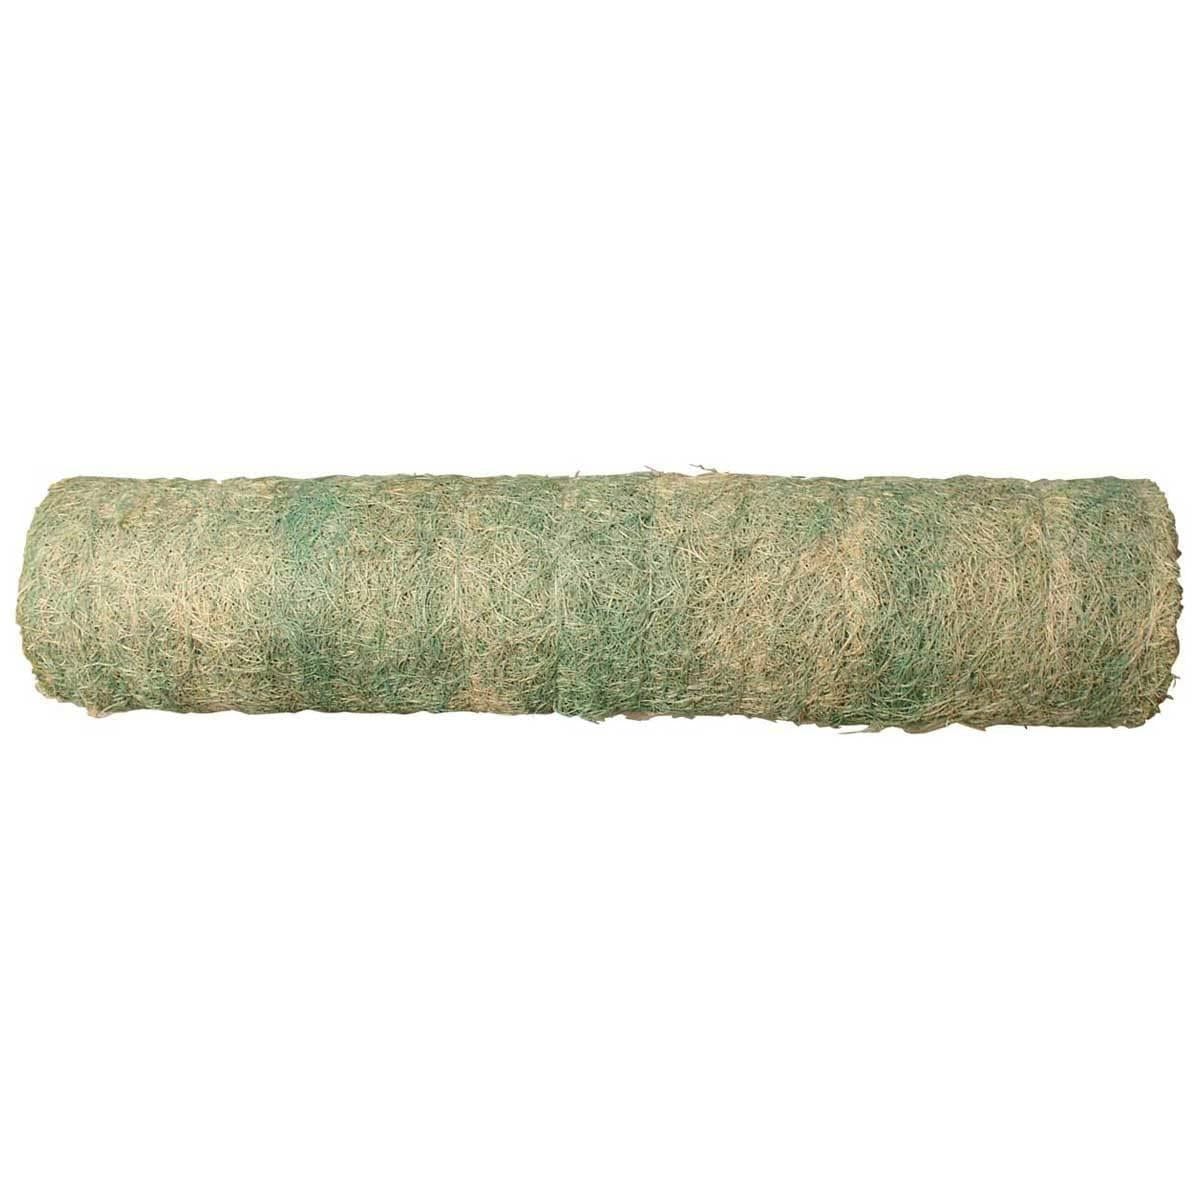 Curlex Green Biodegradable Erosion Control Blanket